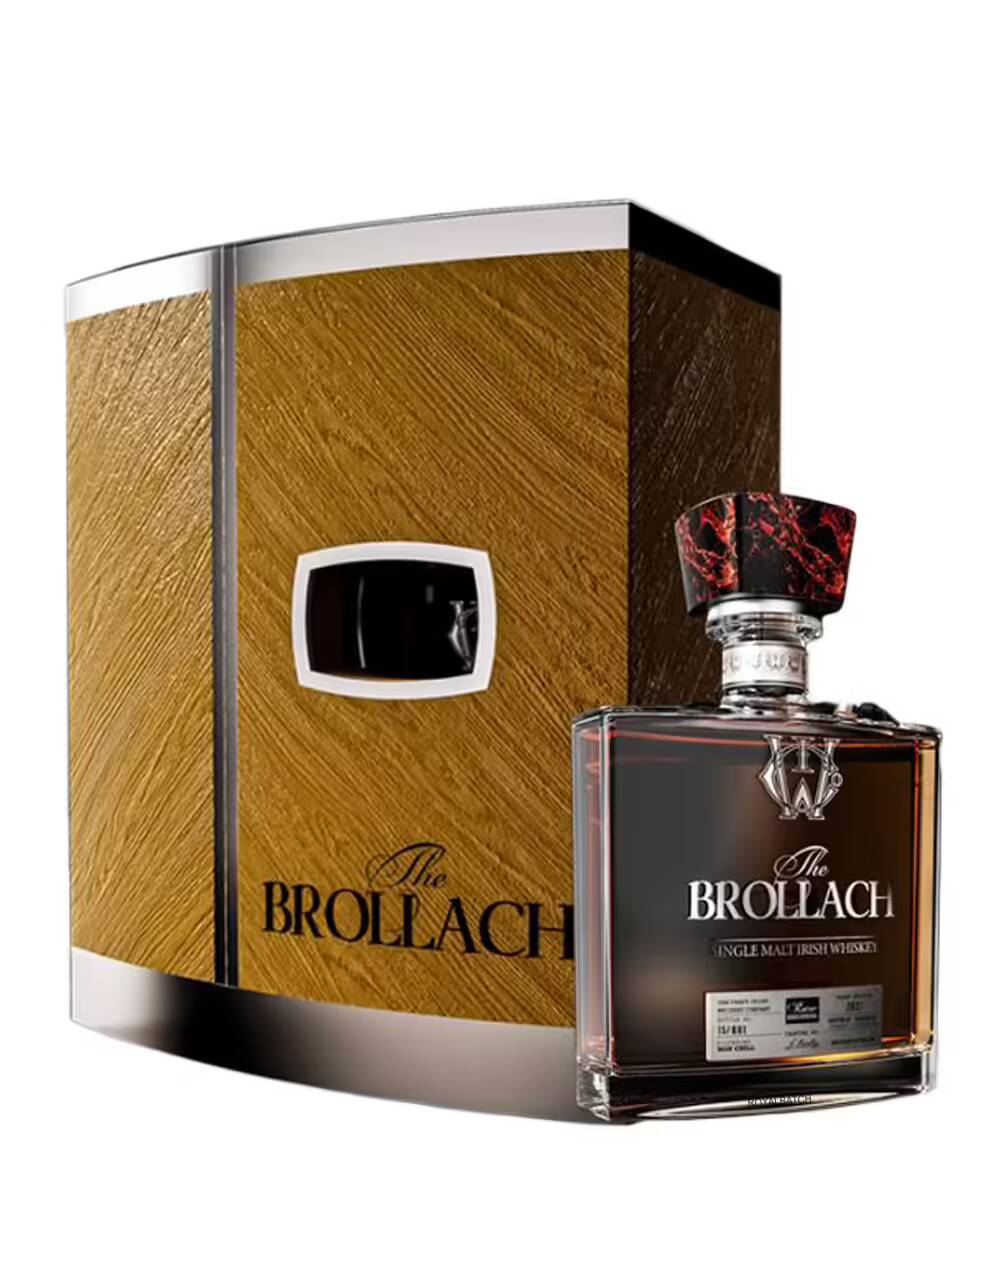 The Brollach Single Malt Irish Whisky